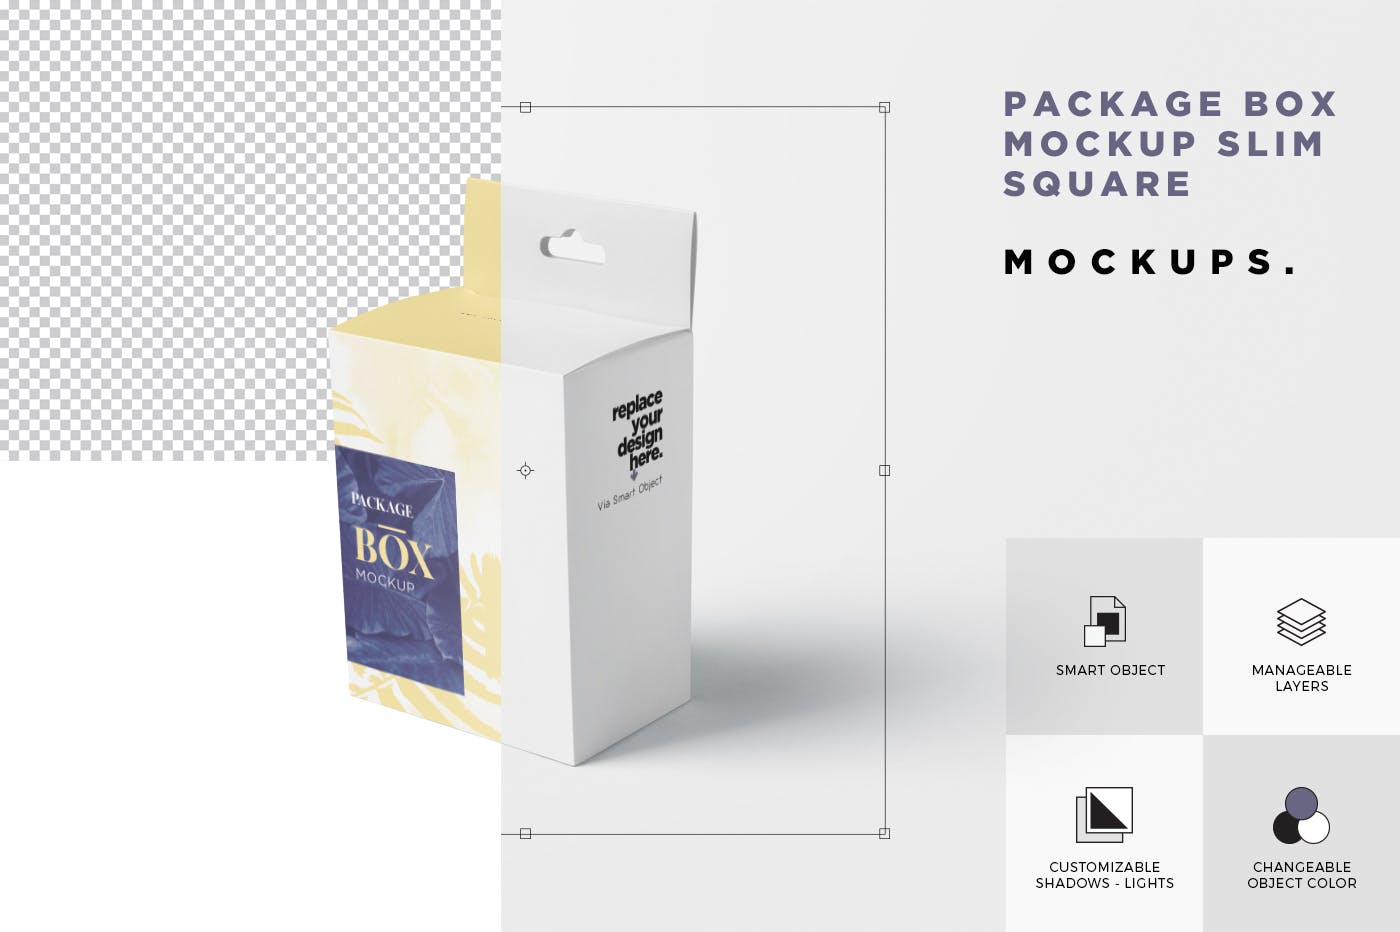 挂耳式扁平矩形包装盒非凡图库精选模板 Package Box Mockup Set – Slim Square with Hanger插图(6)